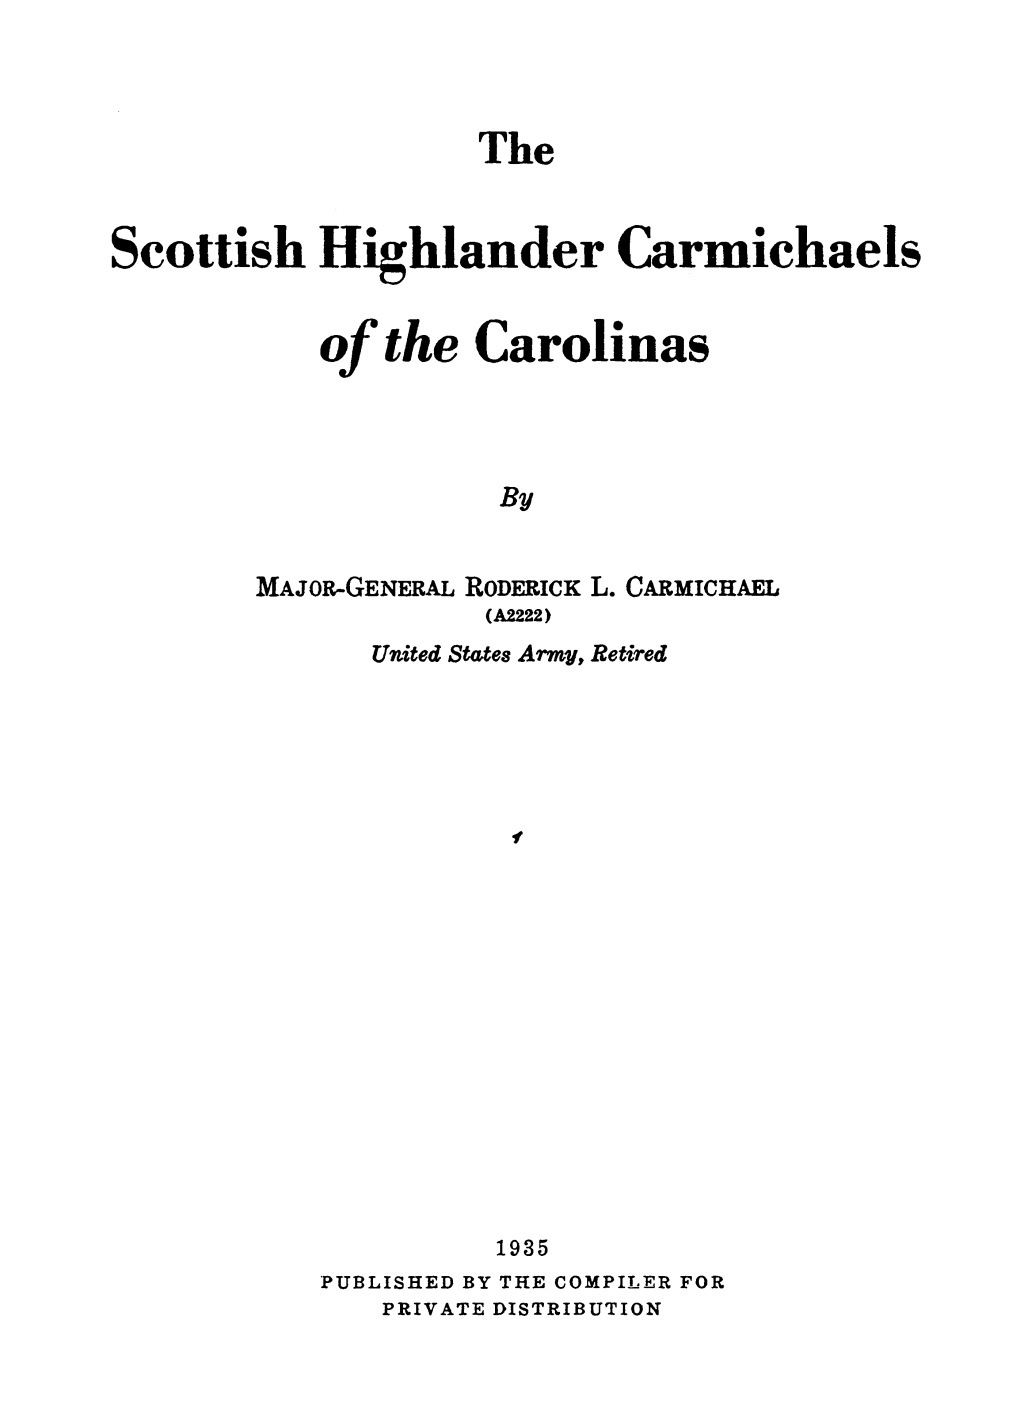 Scottish Highlander Carmichaels of the Carolinas